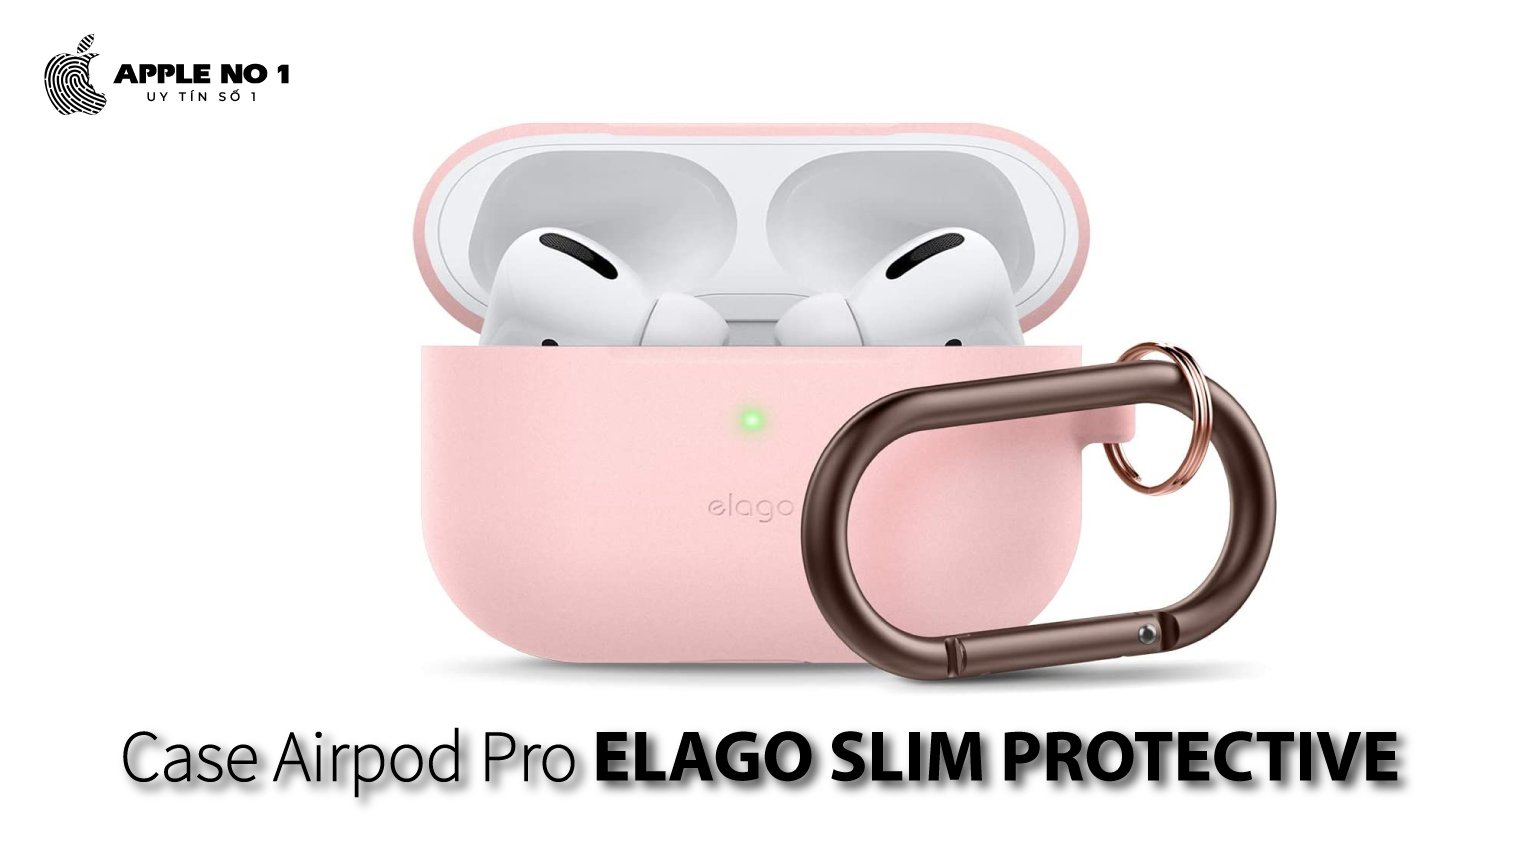 Case Airpod Pro Elago Slim Protective